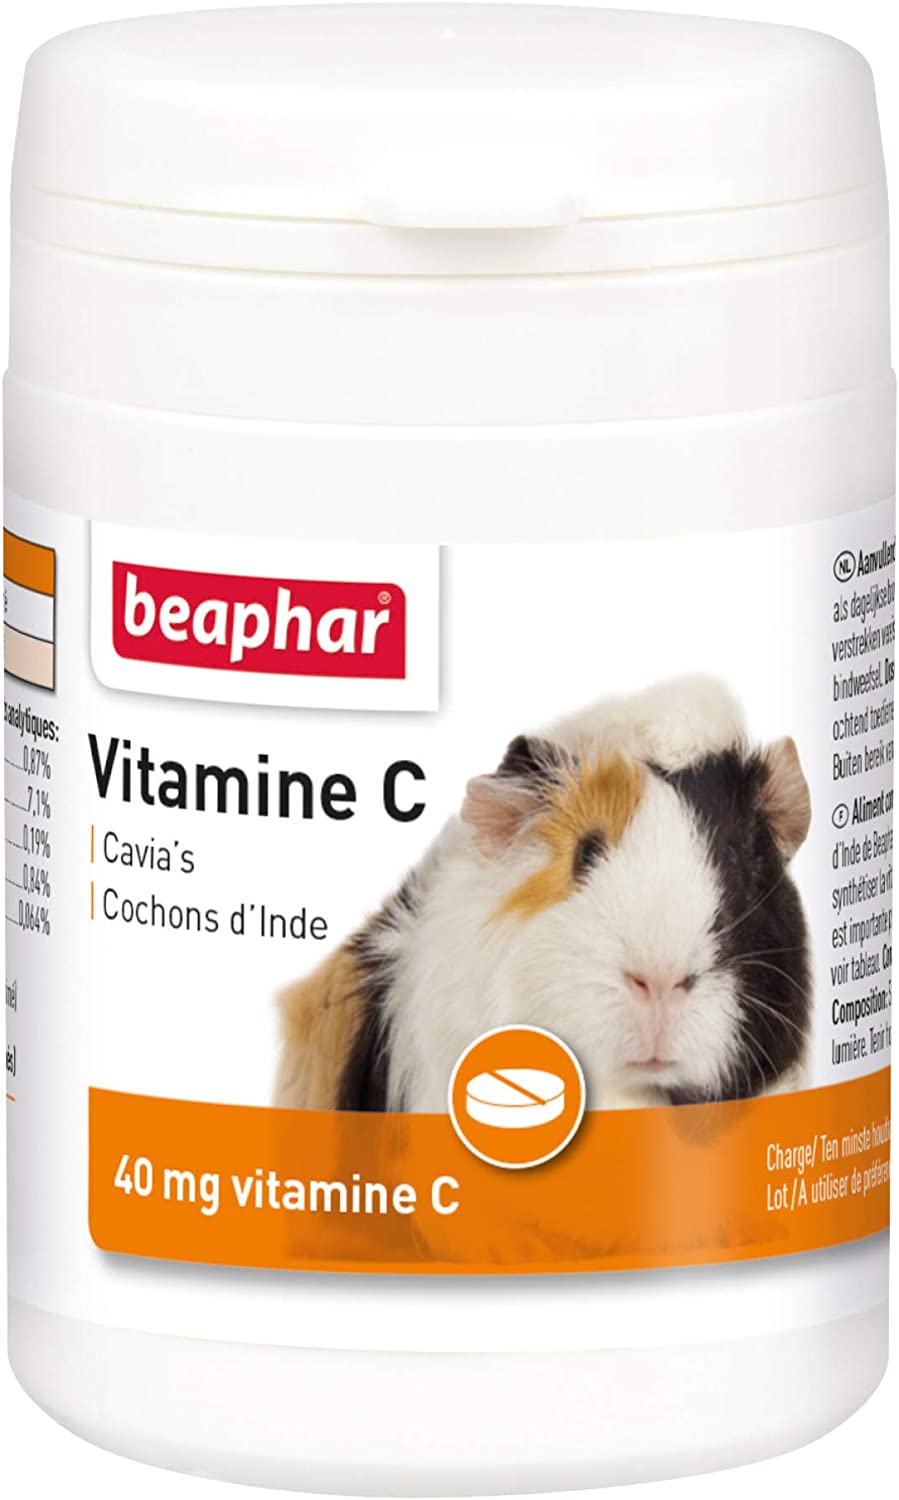 Guinea pigs and vitamin C